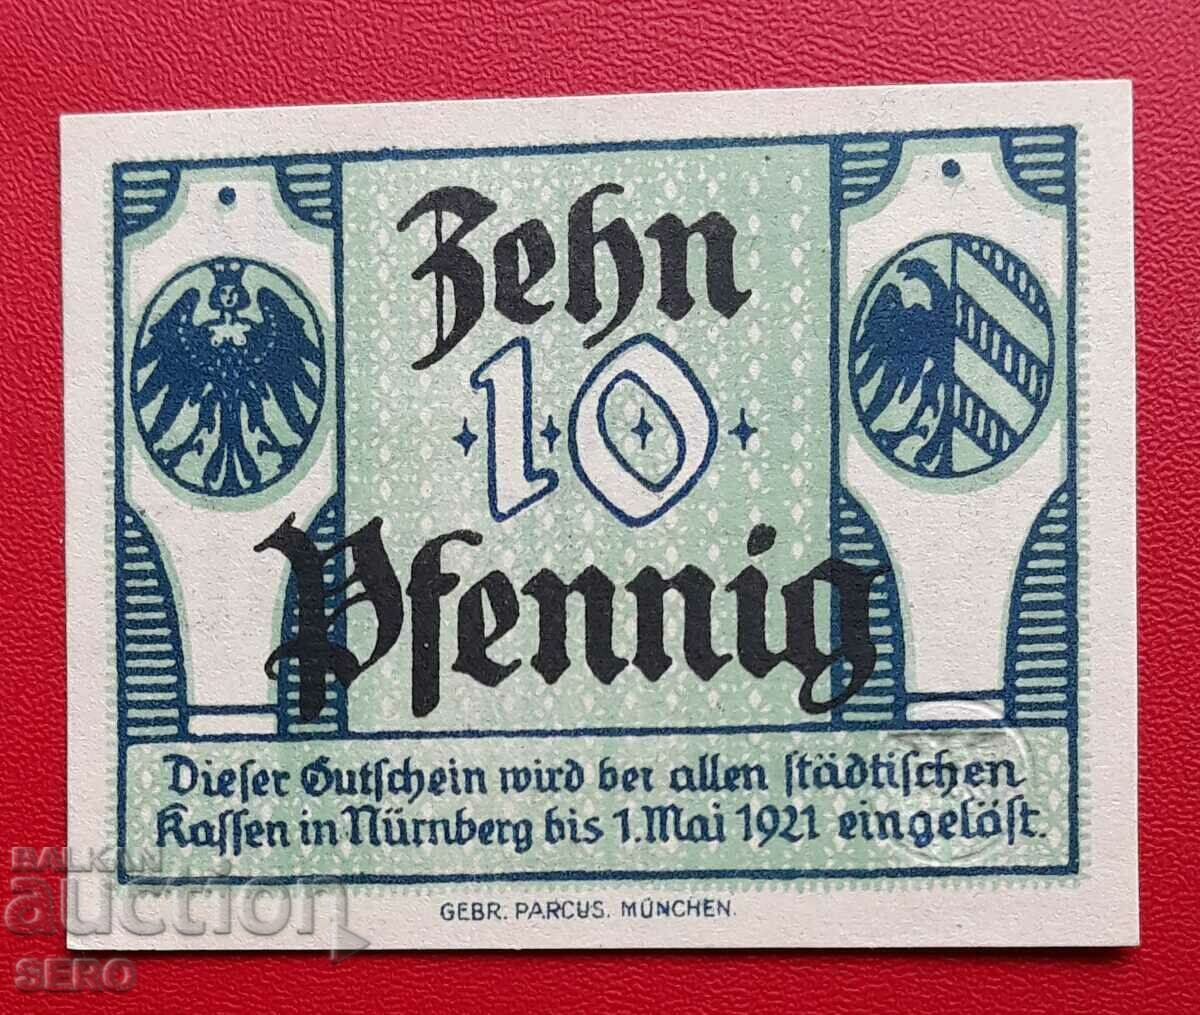 Banknote-Germany-Bavaria-Nuremberg-10 Pfennig 1920